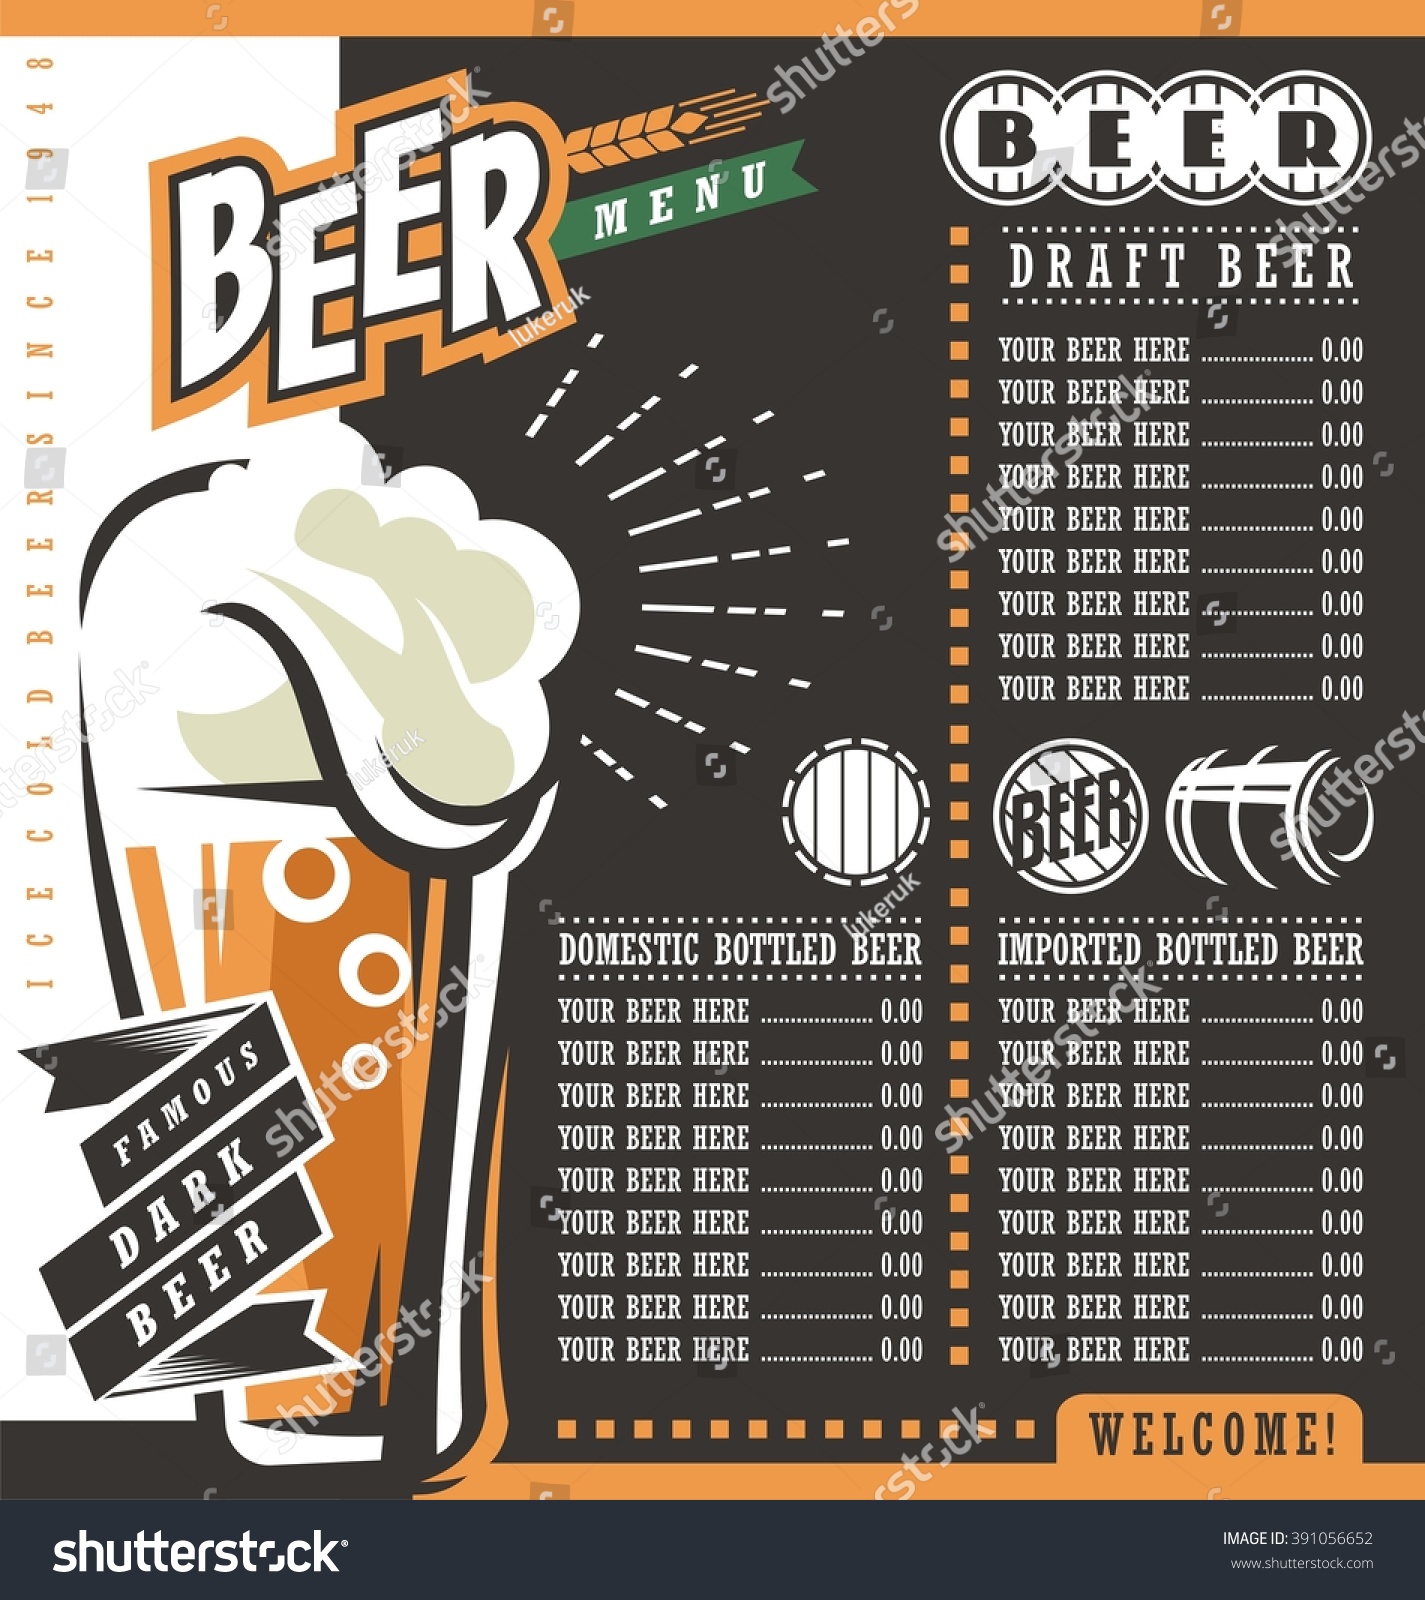 Beer Price List Template